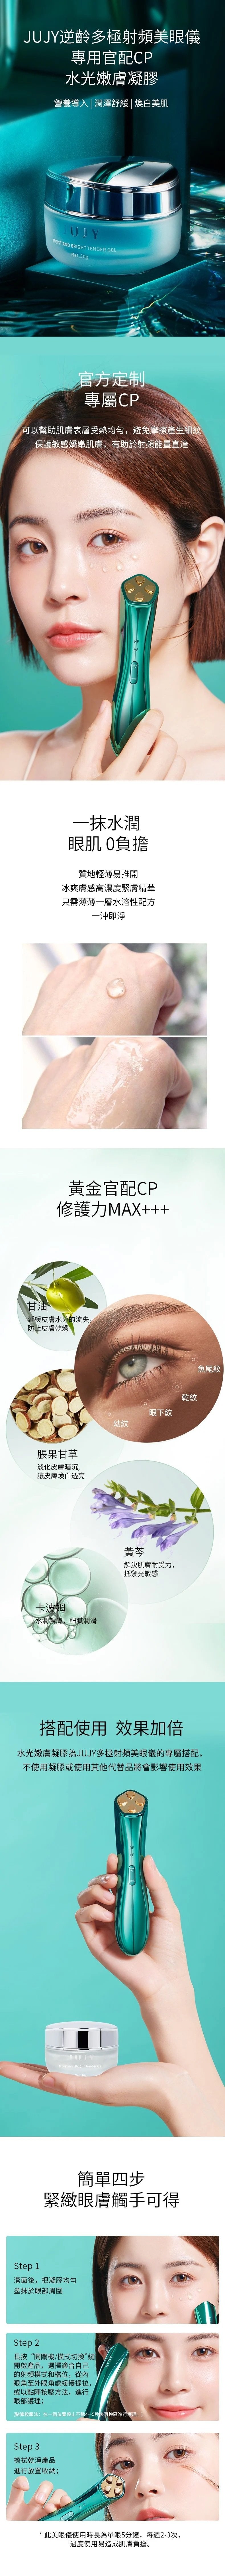 Jujy - Anti-aging multi-polar RF radio frequency eye beauty instrument special water light rejuvenation gel